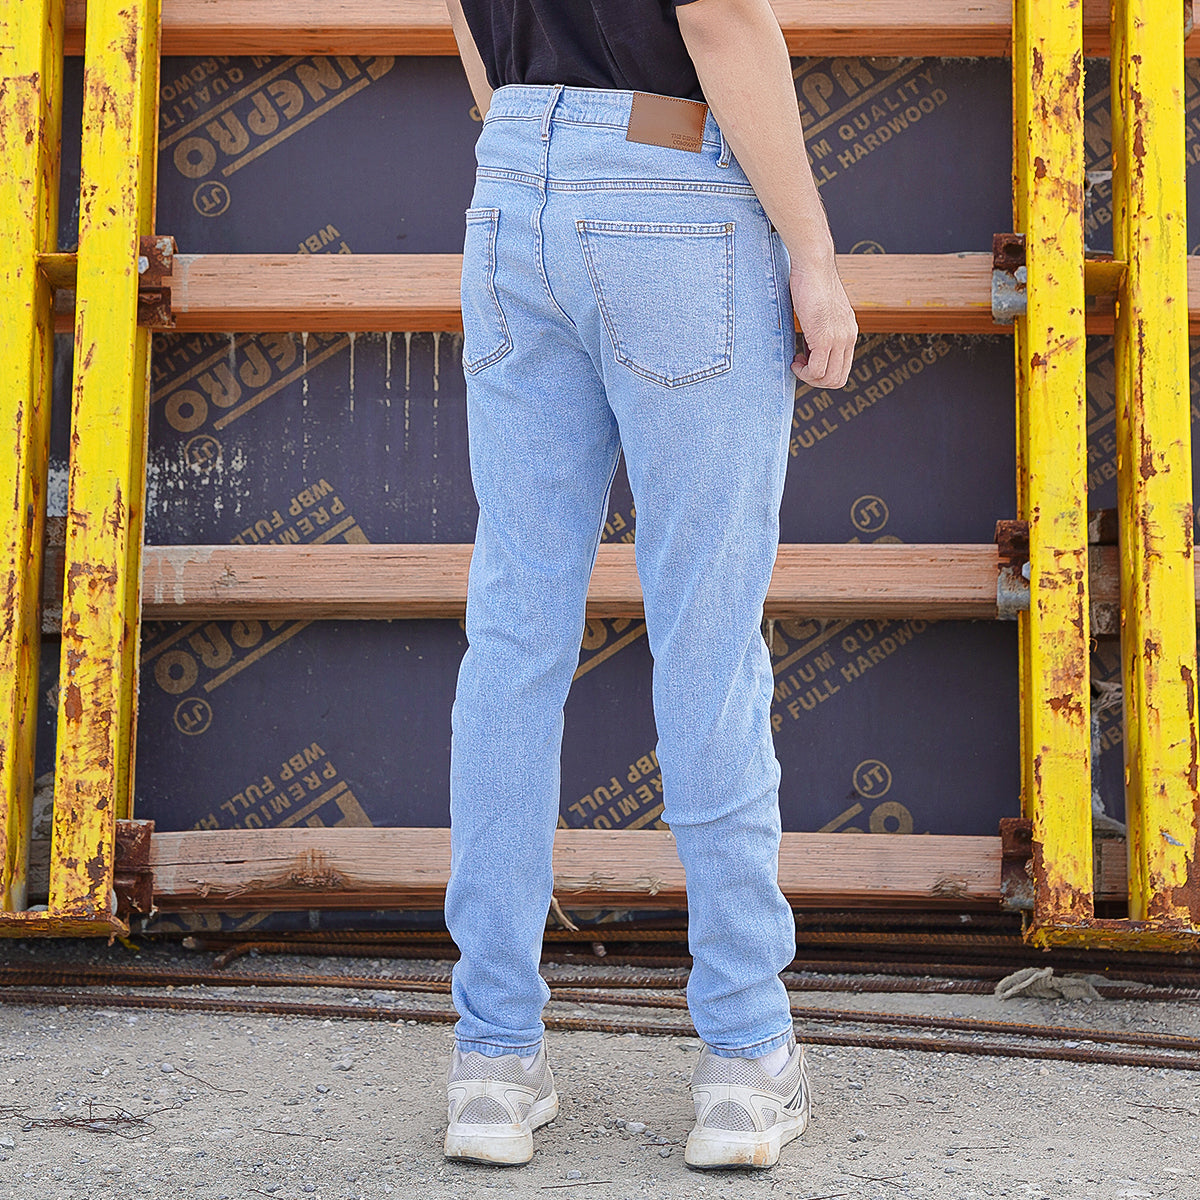 Light Blue Jeans (Skinny Fit) – The Denim Company